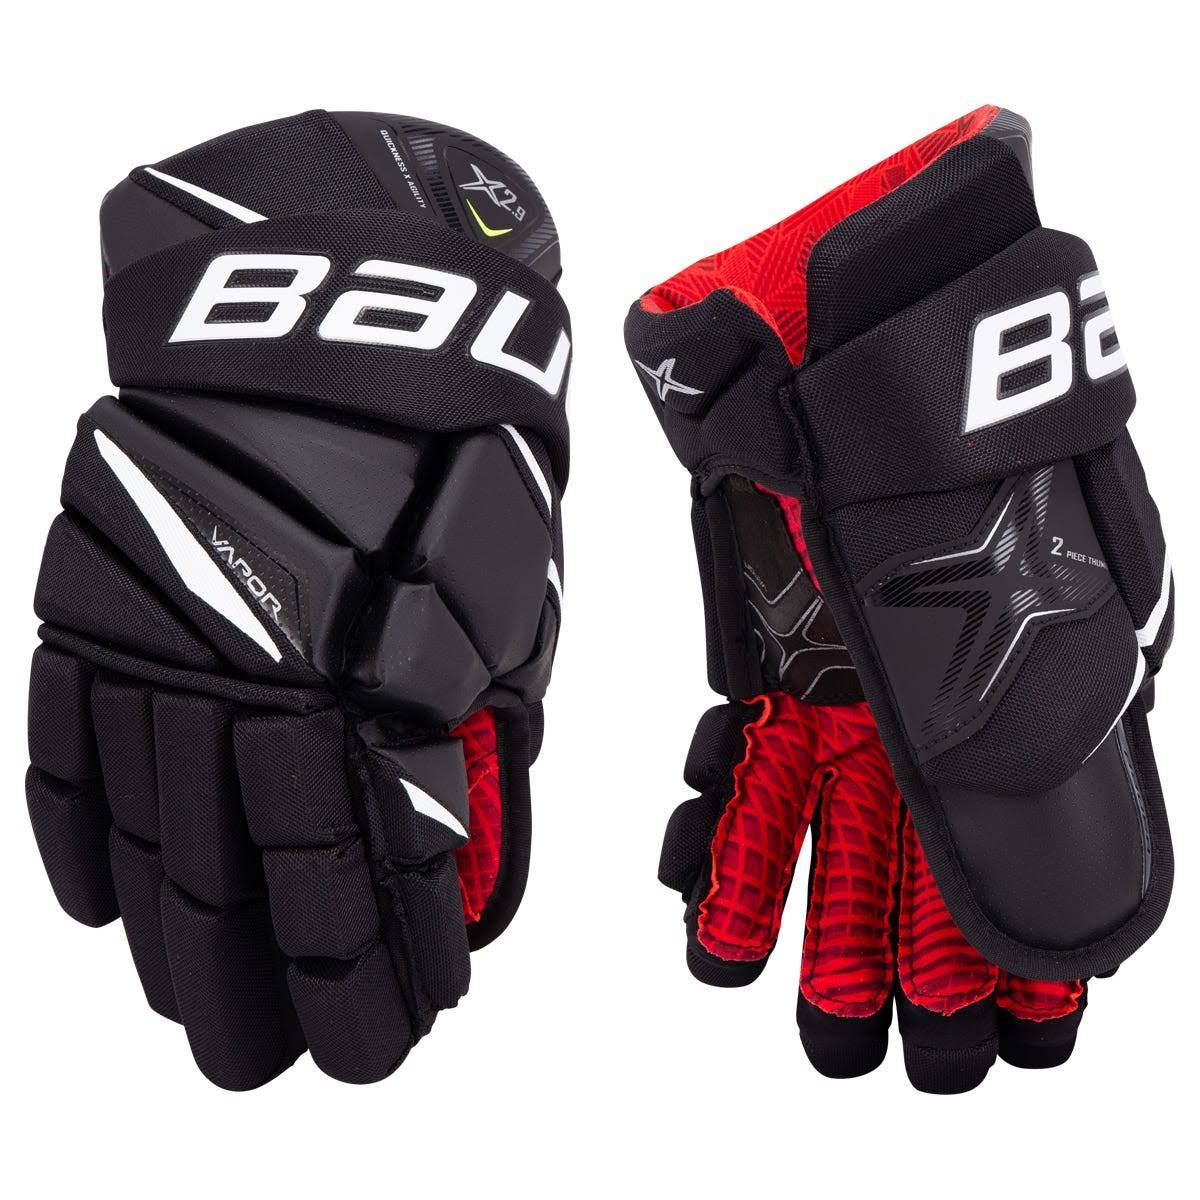 Bauer Vapor X2.9 Hockey Gloves - Senior - Black/White - 13.0"